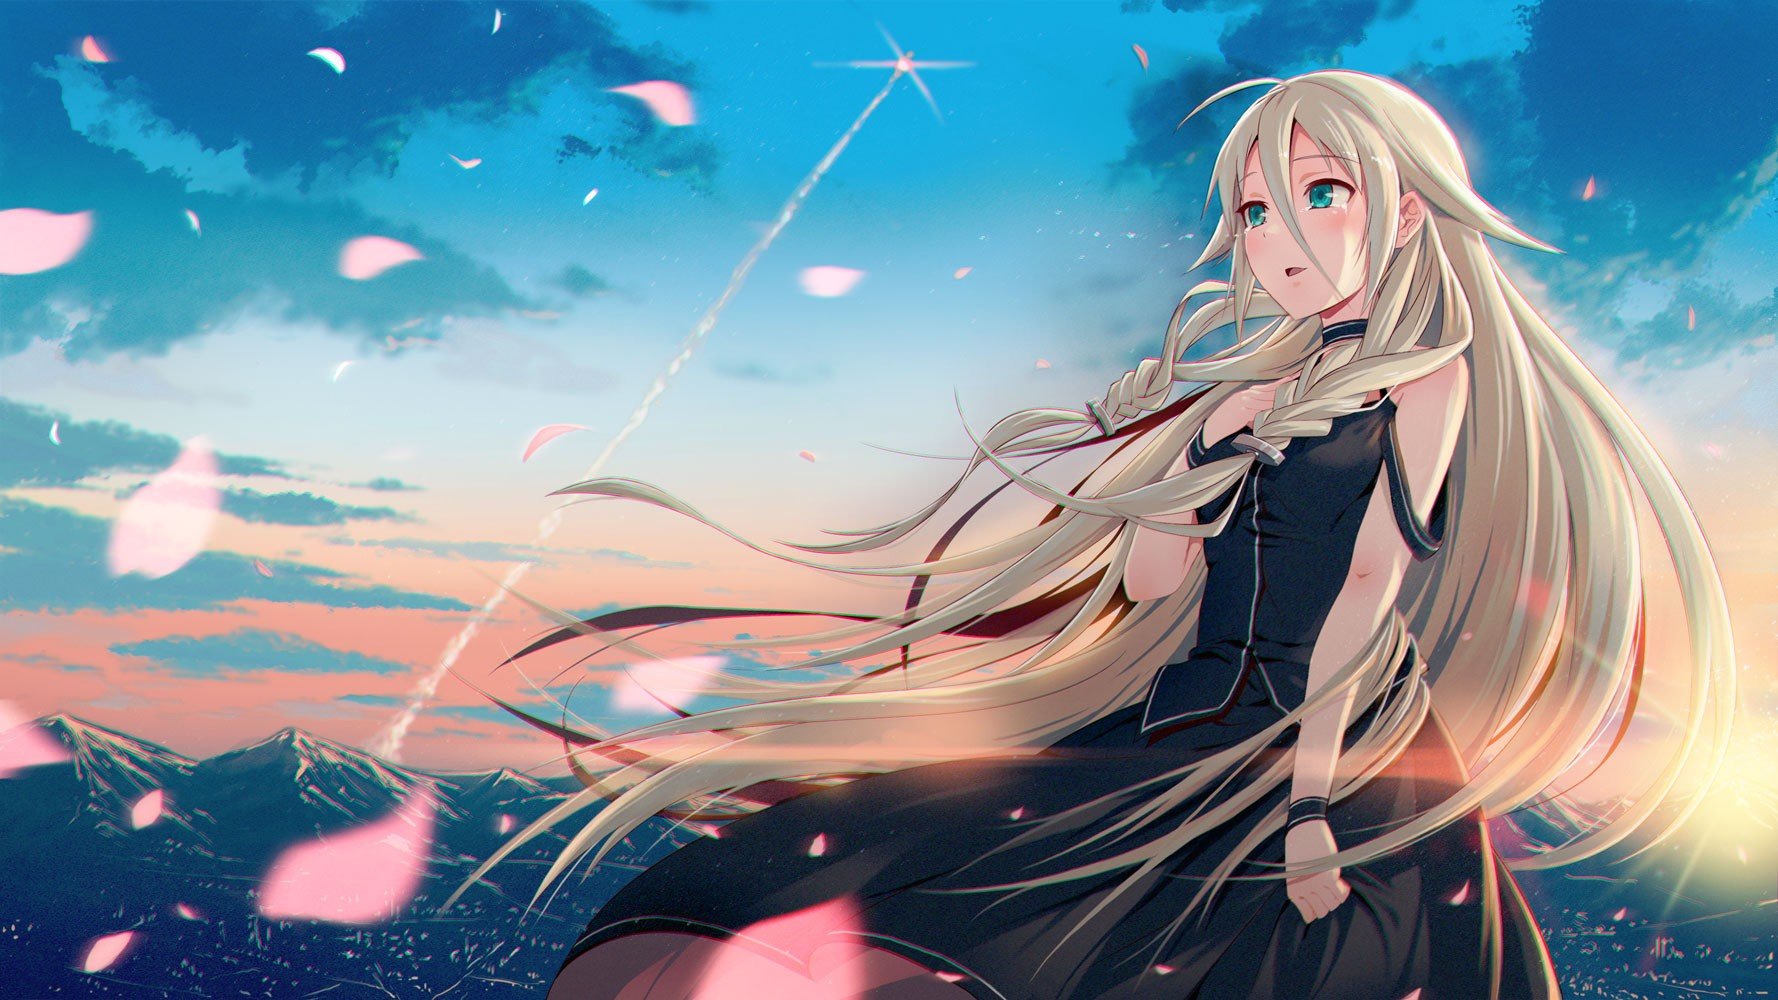 Vocaloid, IA (Vocaloid), Black dress, Crying, Long hair, Flower petals, Mountain, Sky, Clouds, Anime girls, Anime Wallpaper